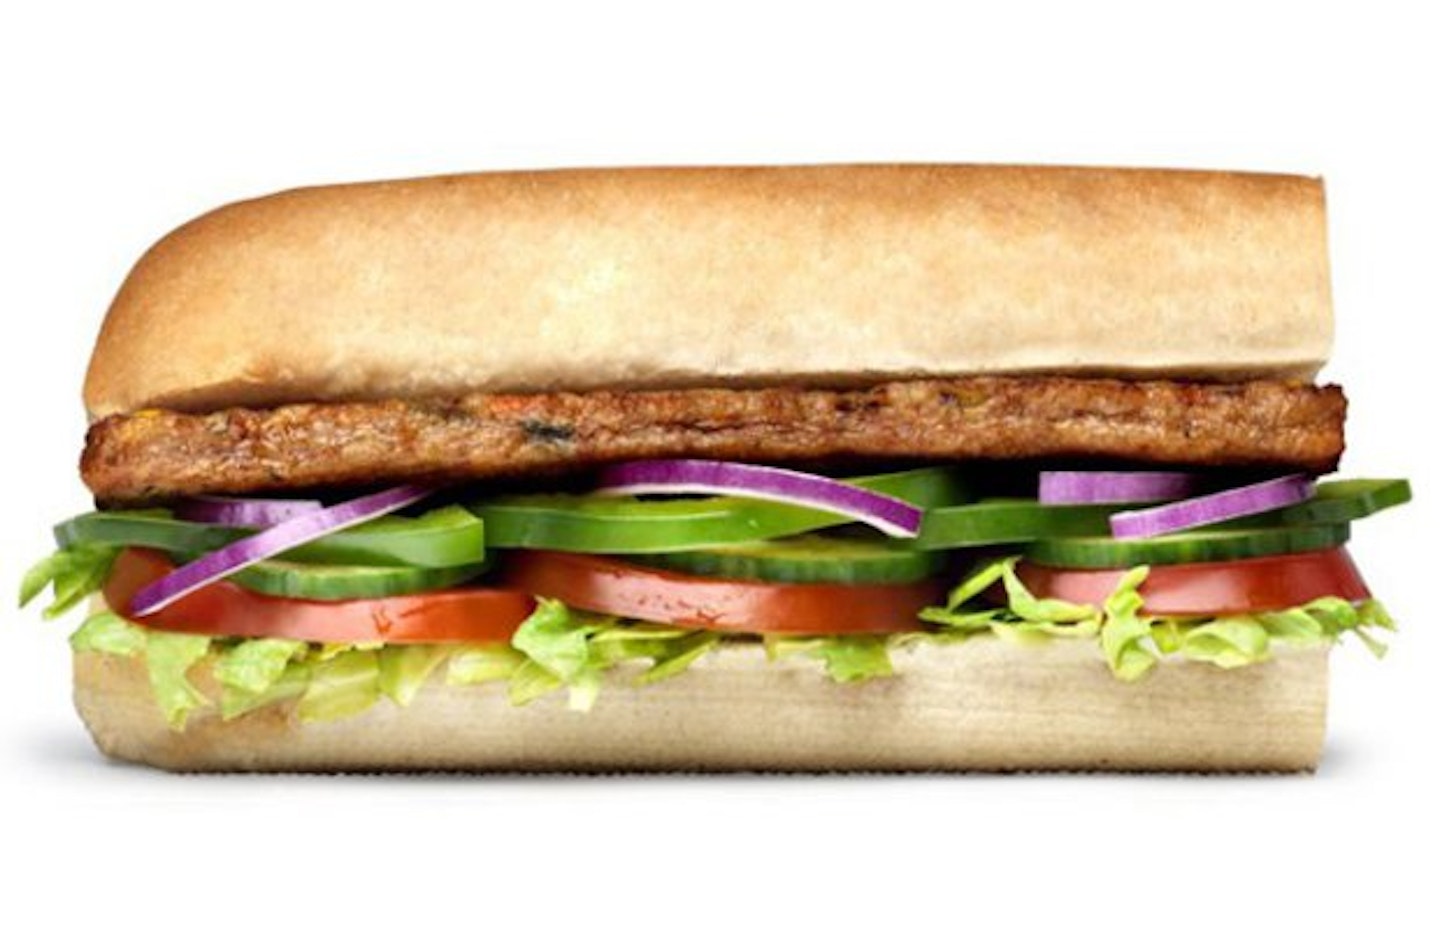 Subway vegan 'steak' sandwich